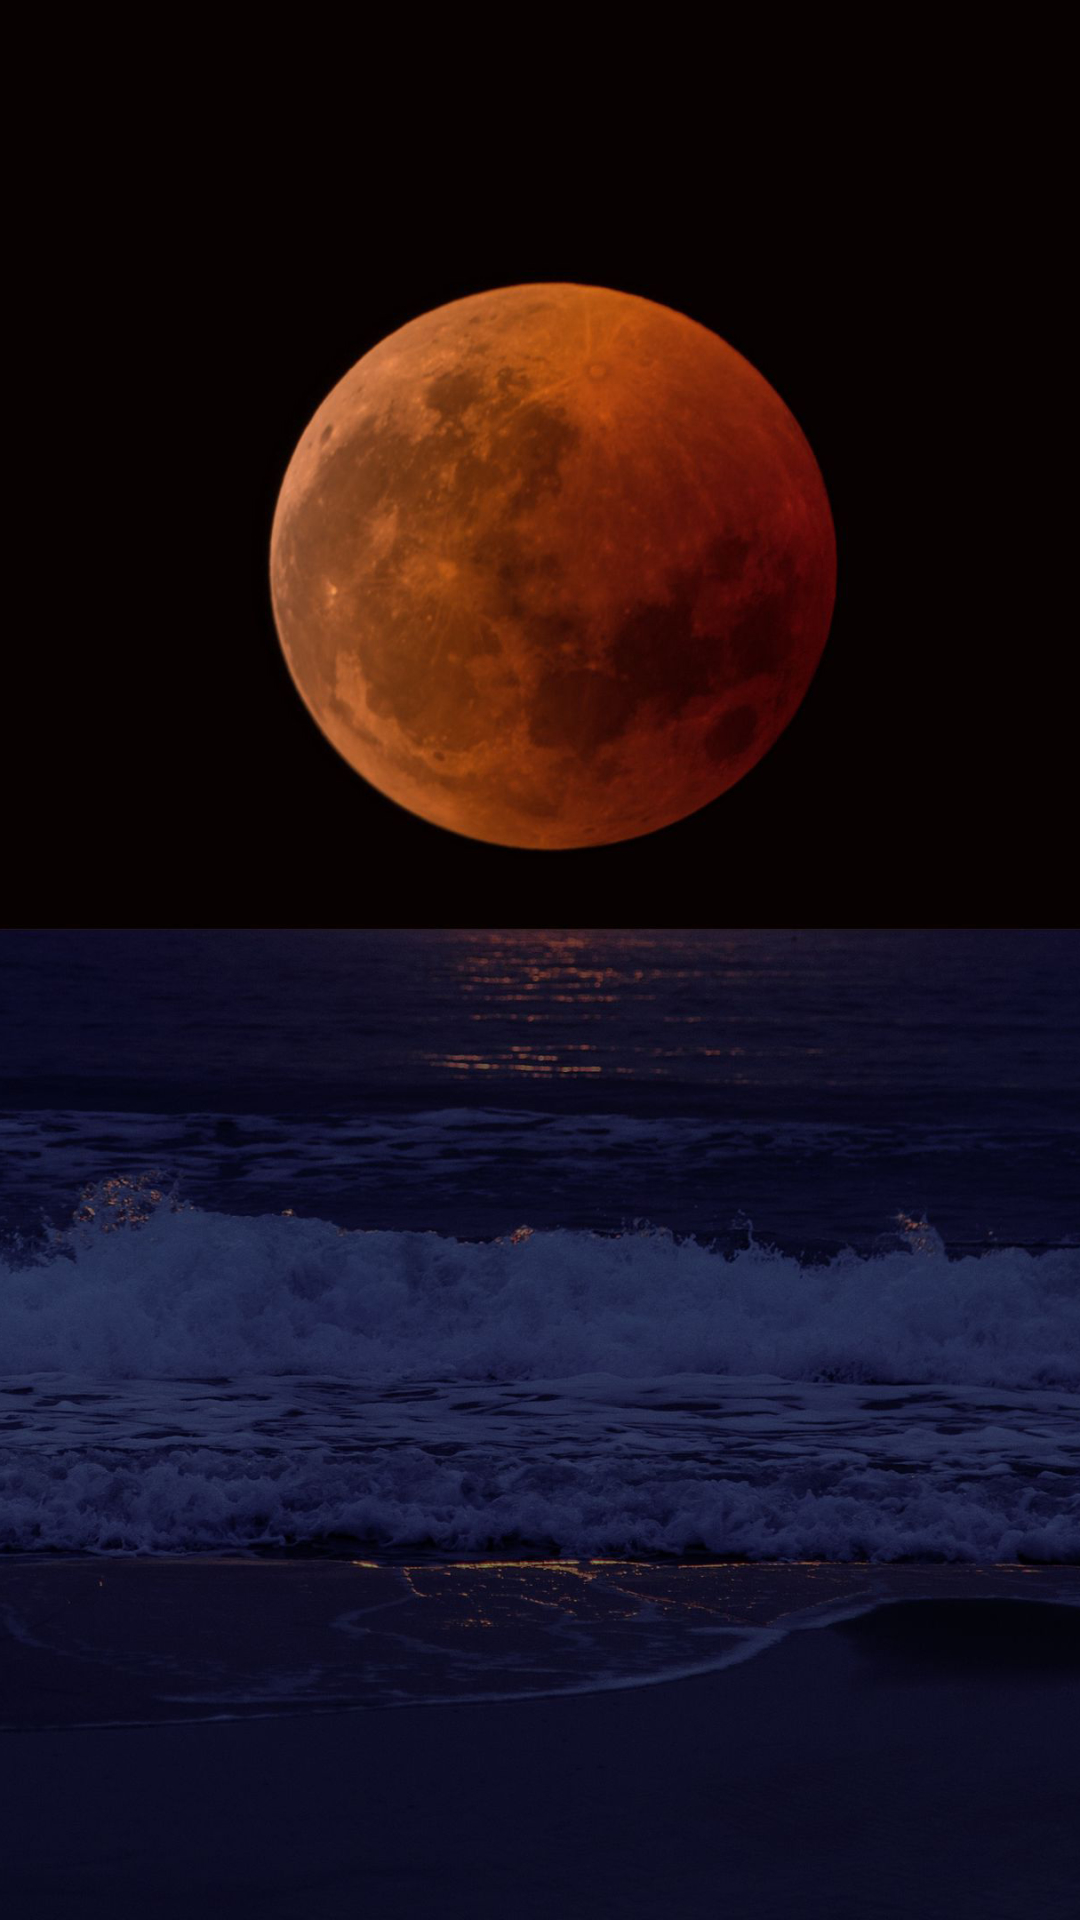 Full Orange Moon near the Horizon